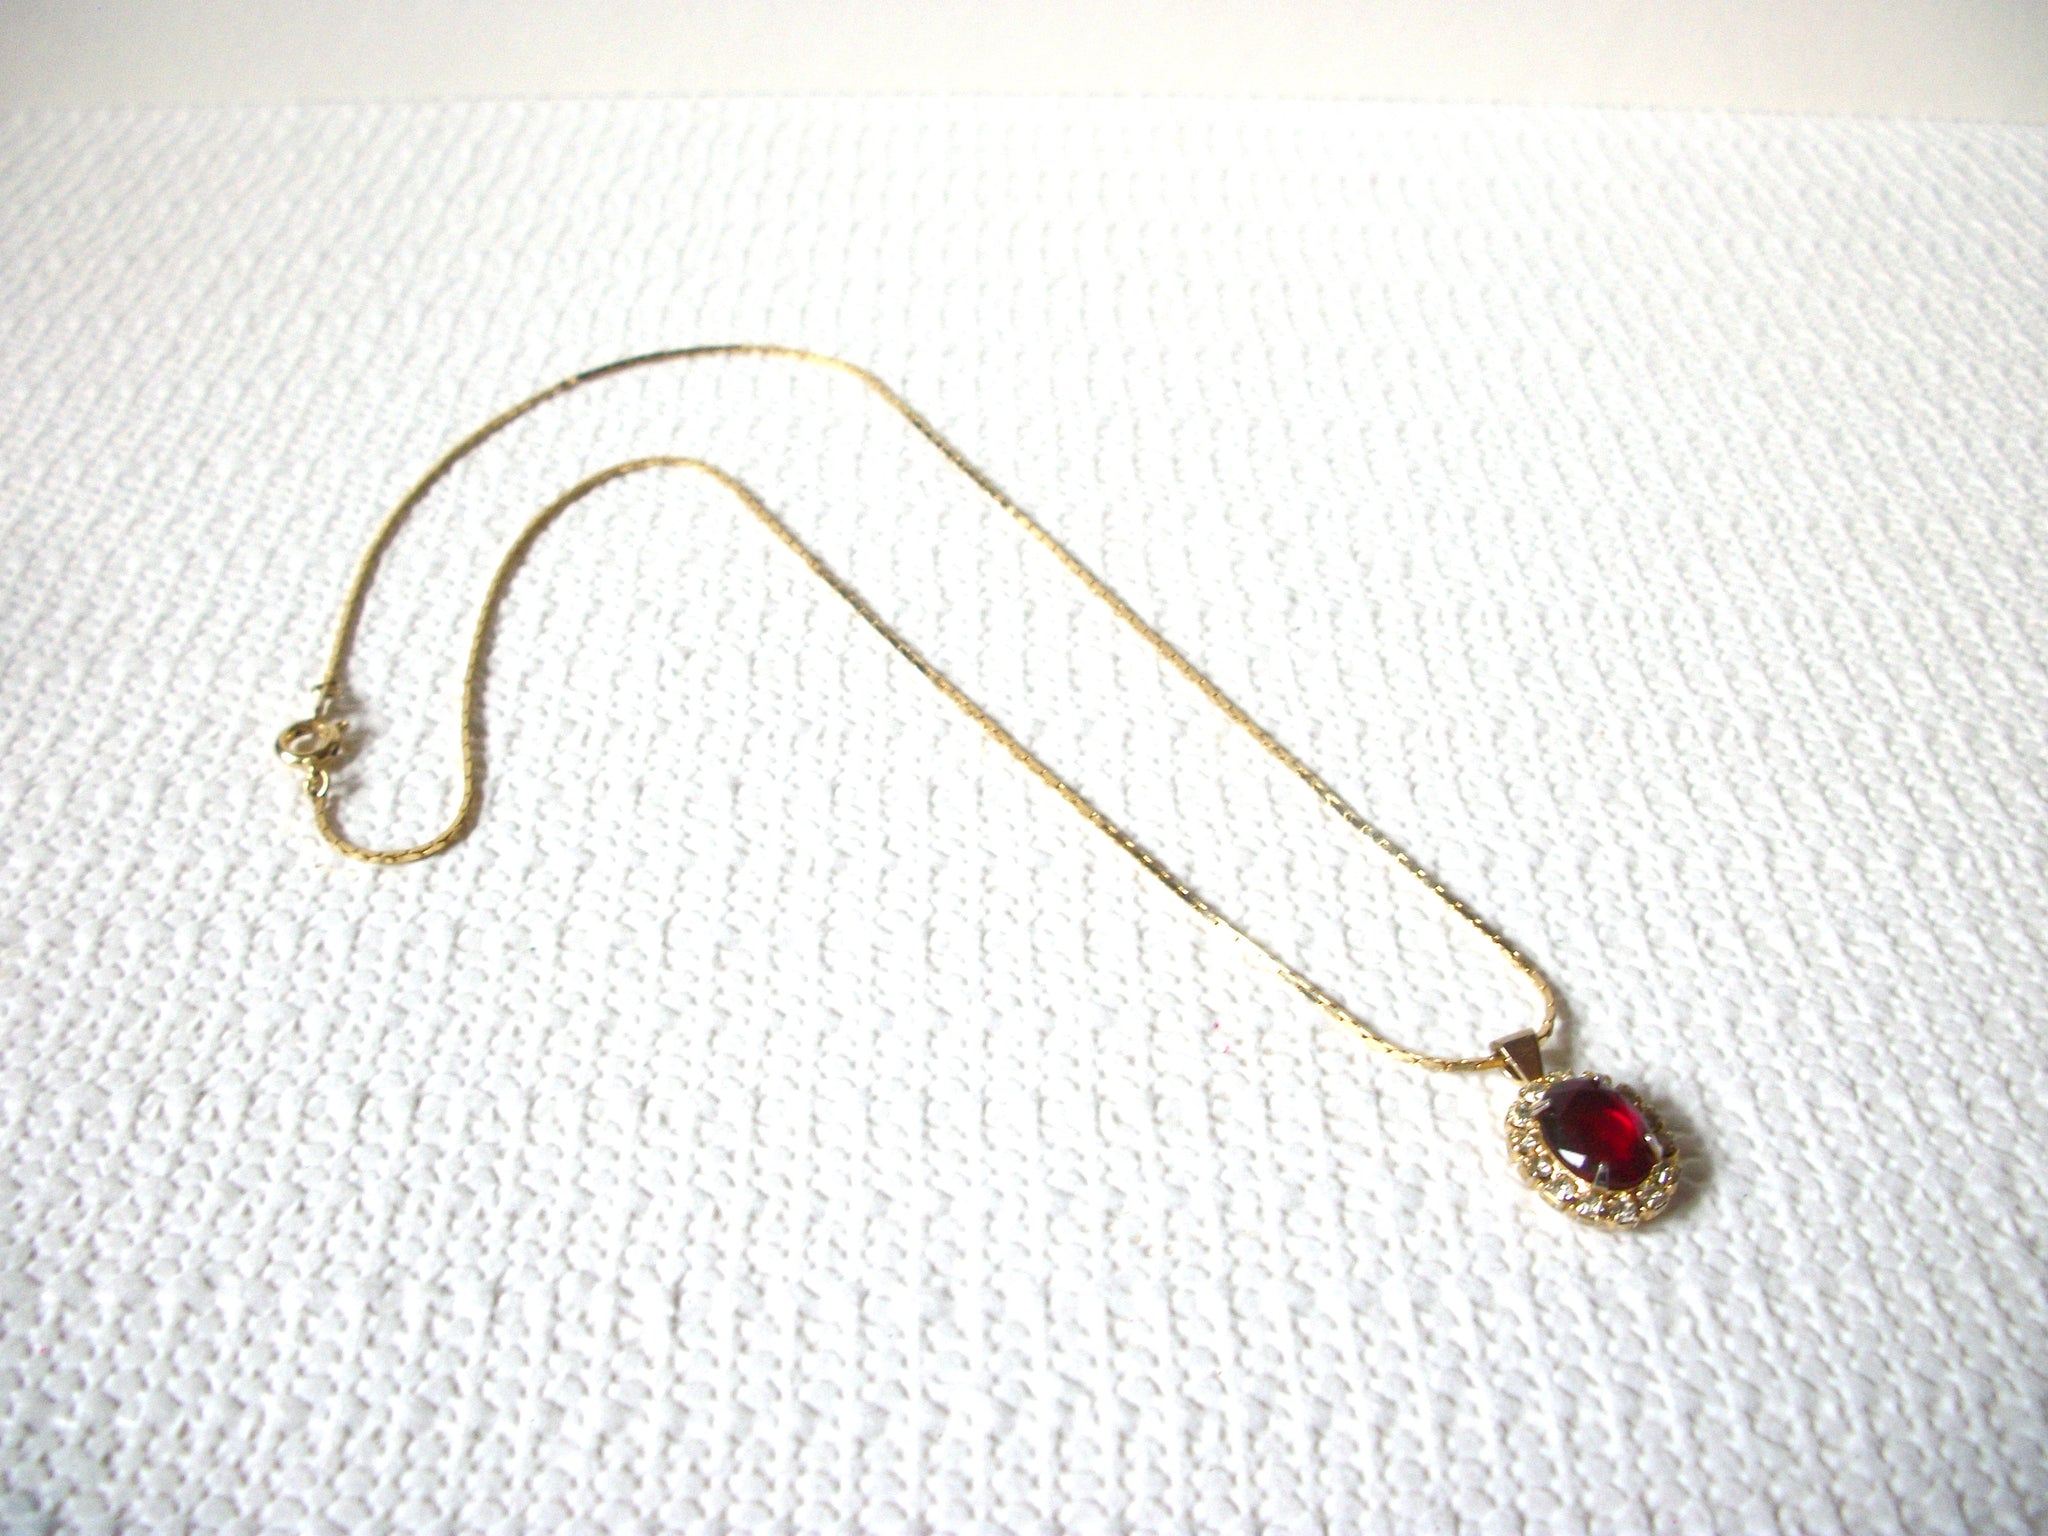 Vintage Ruby Necklace 82920